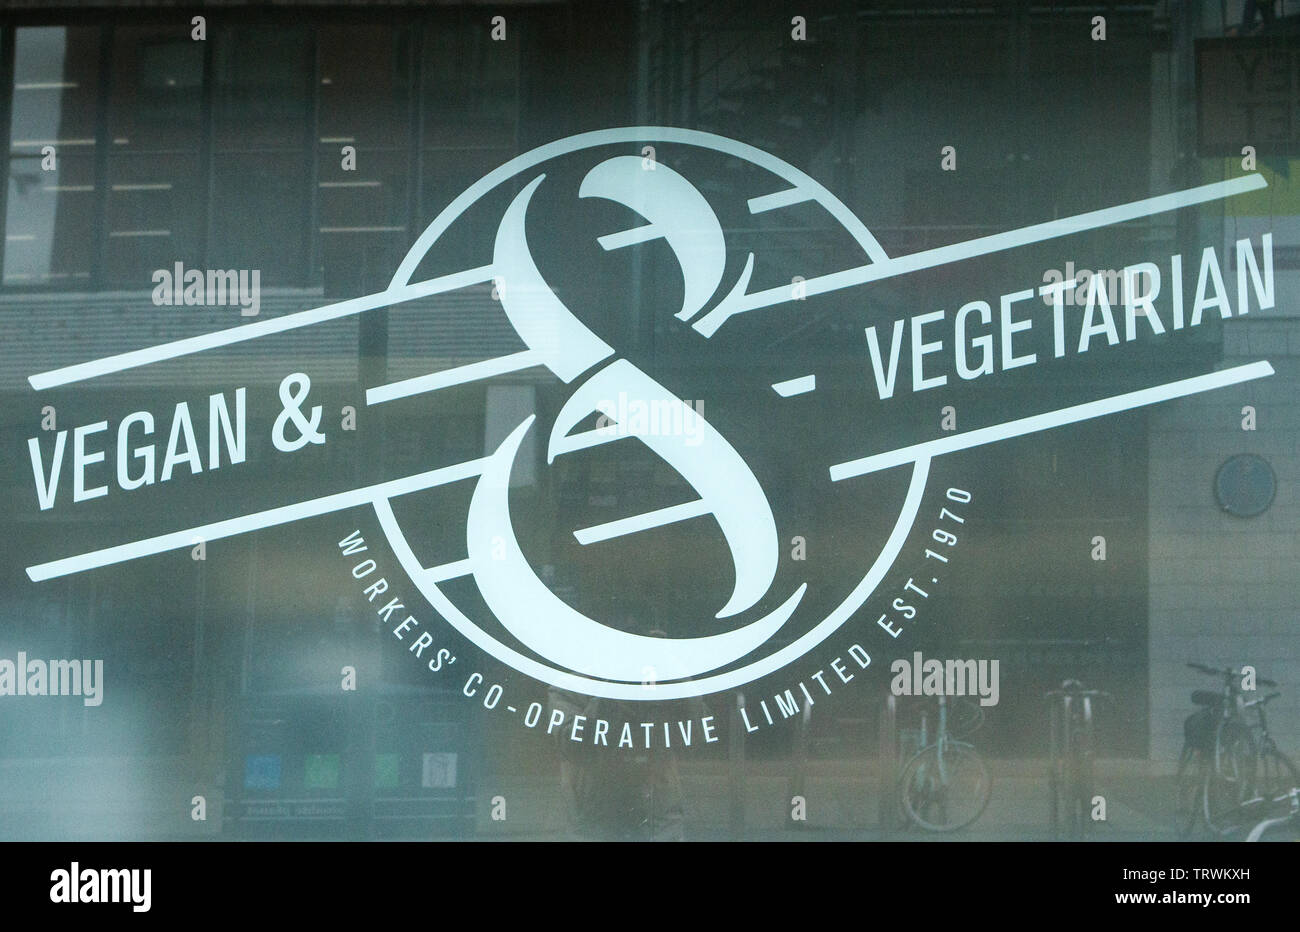 Vegan & Vegetarian store sign on Oxford Road, Manchester, UK Stock Photo